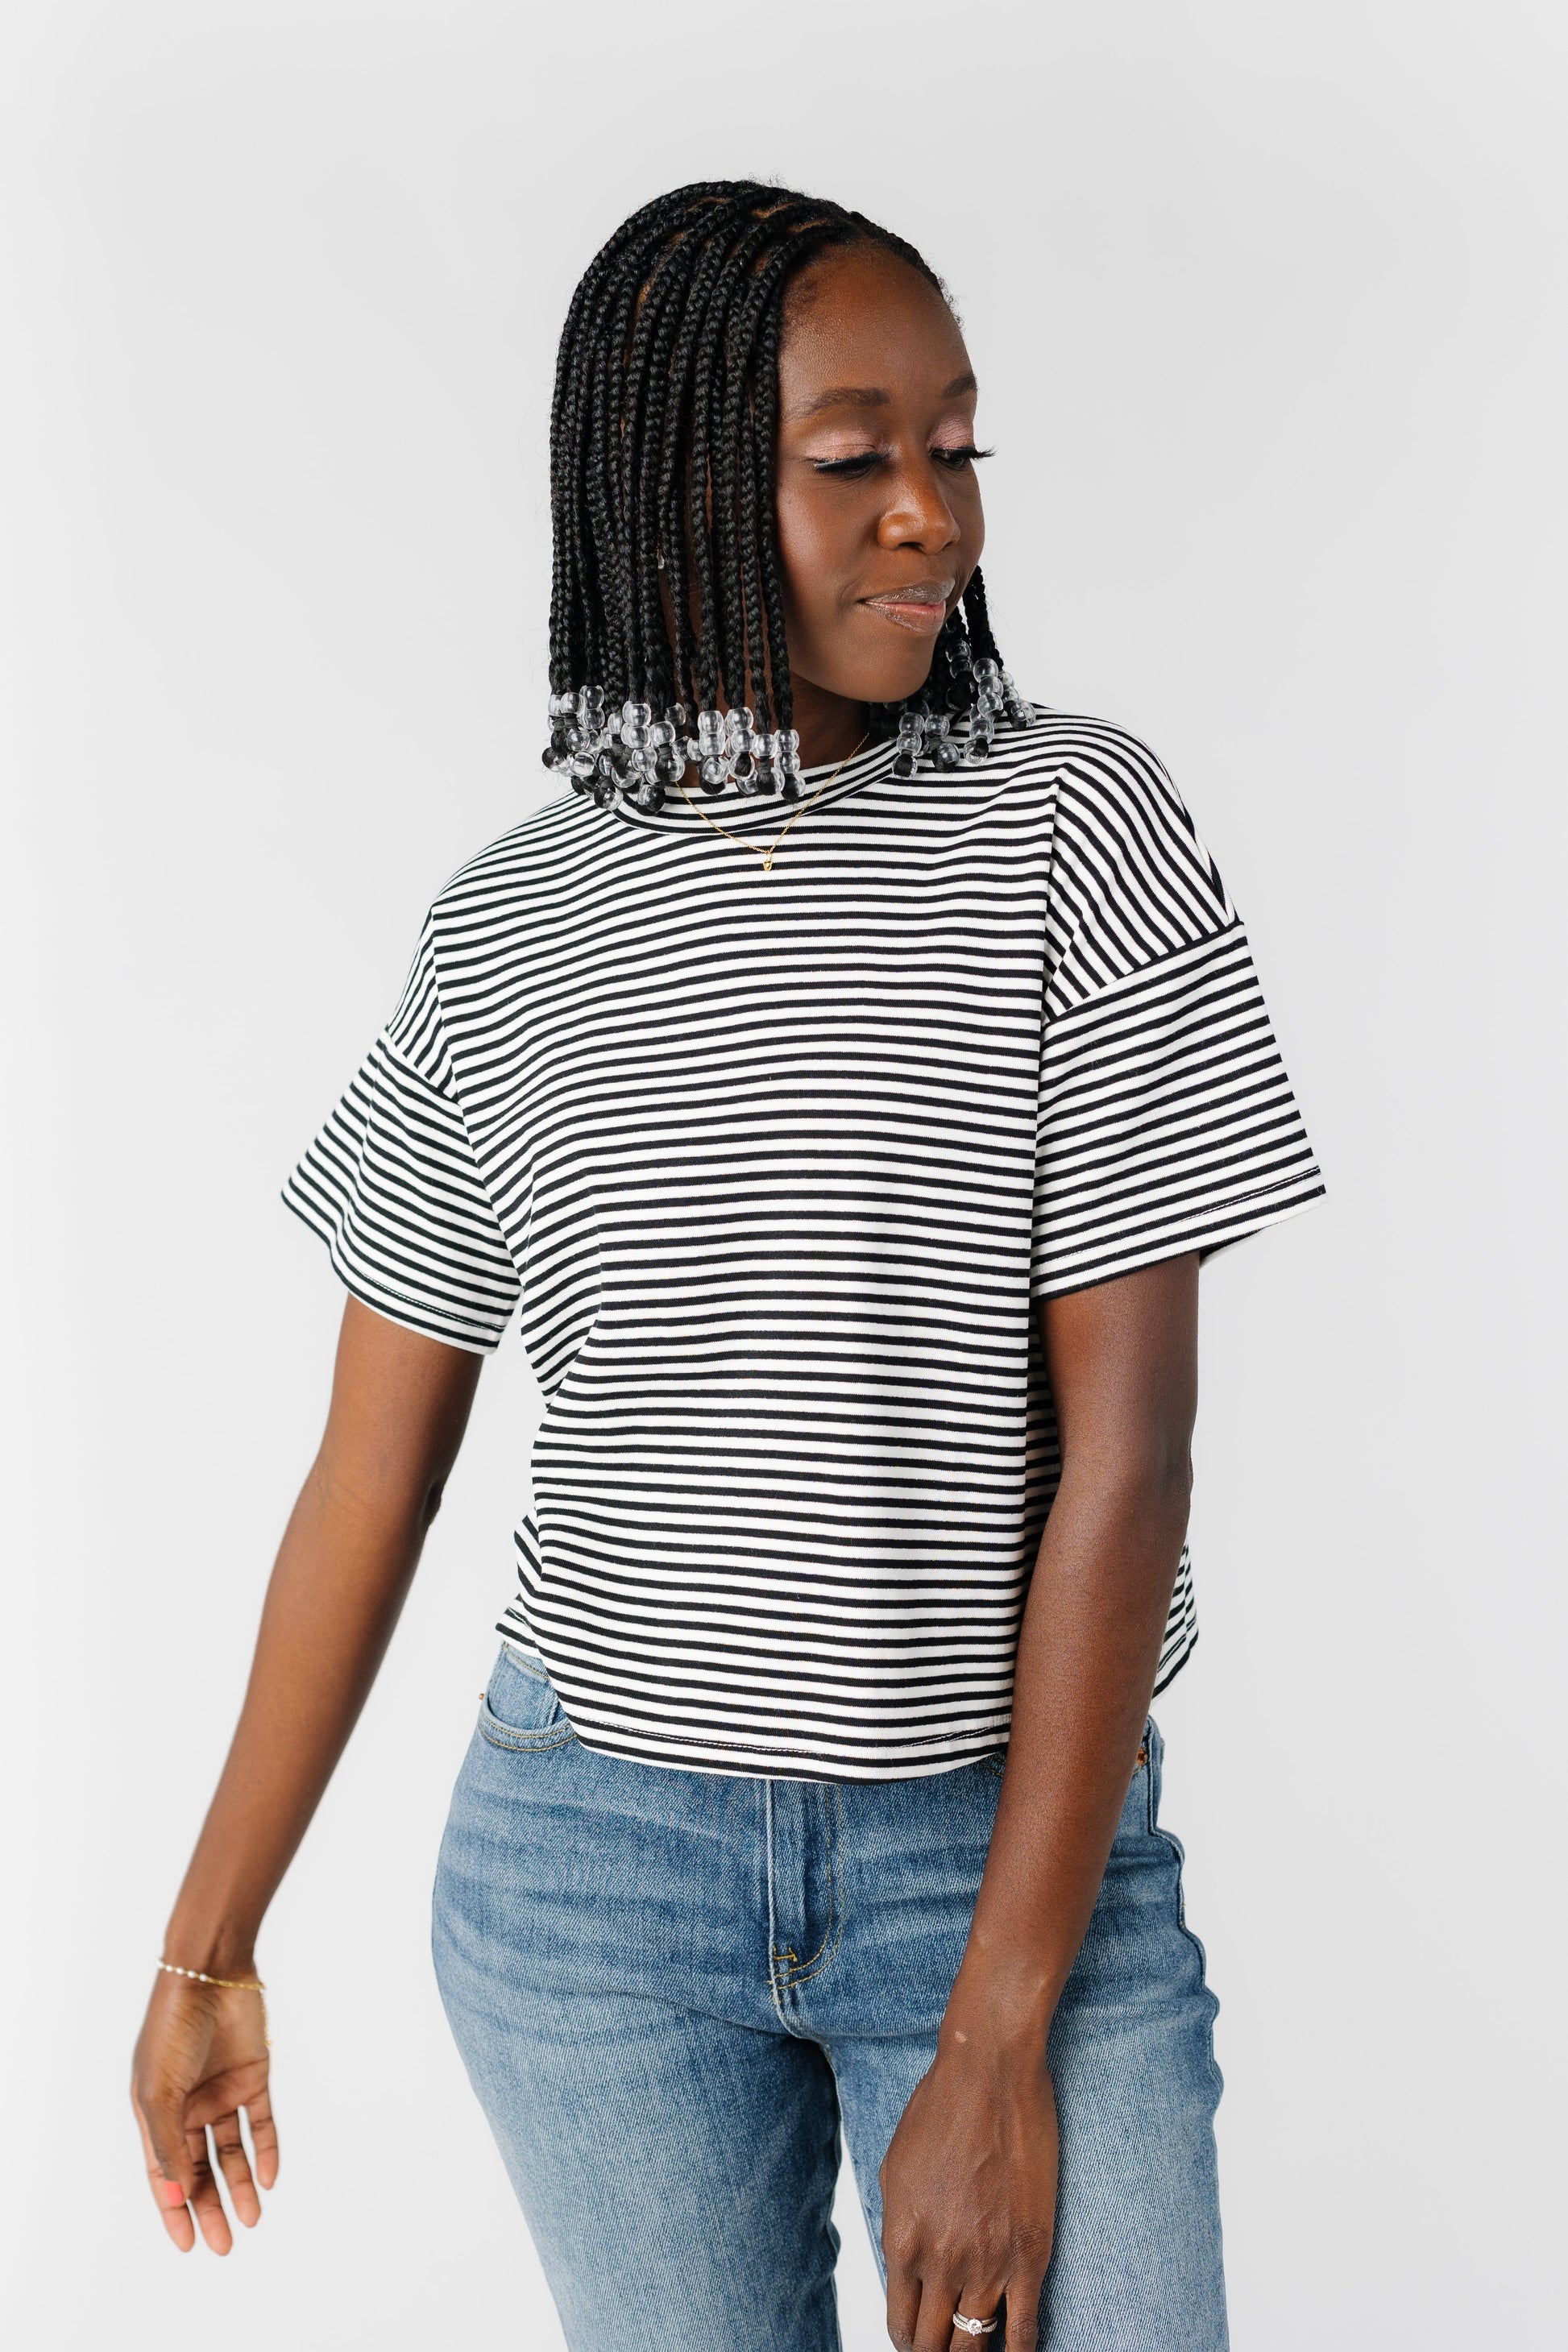 Rolla's Stripe Boxy Tee - Ivory/Black WOMEN'S T-SHIRT Things Between 